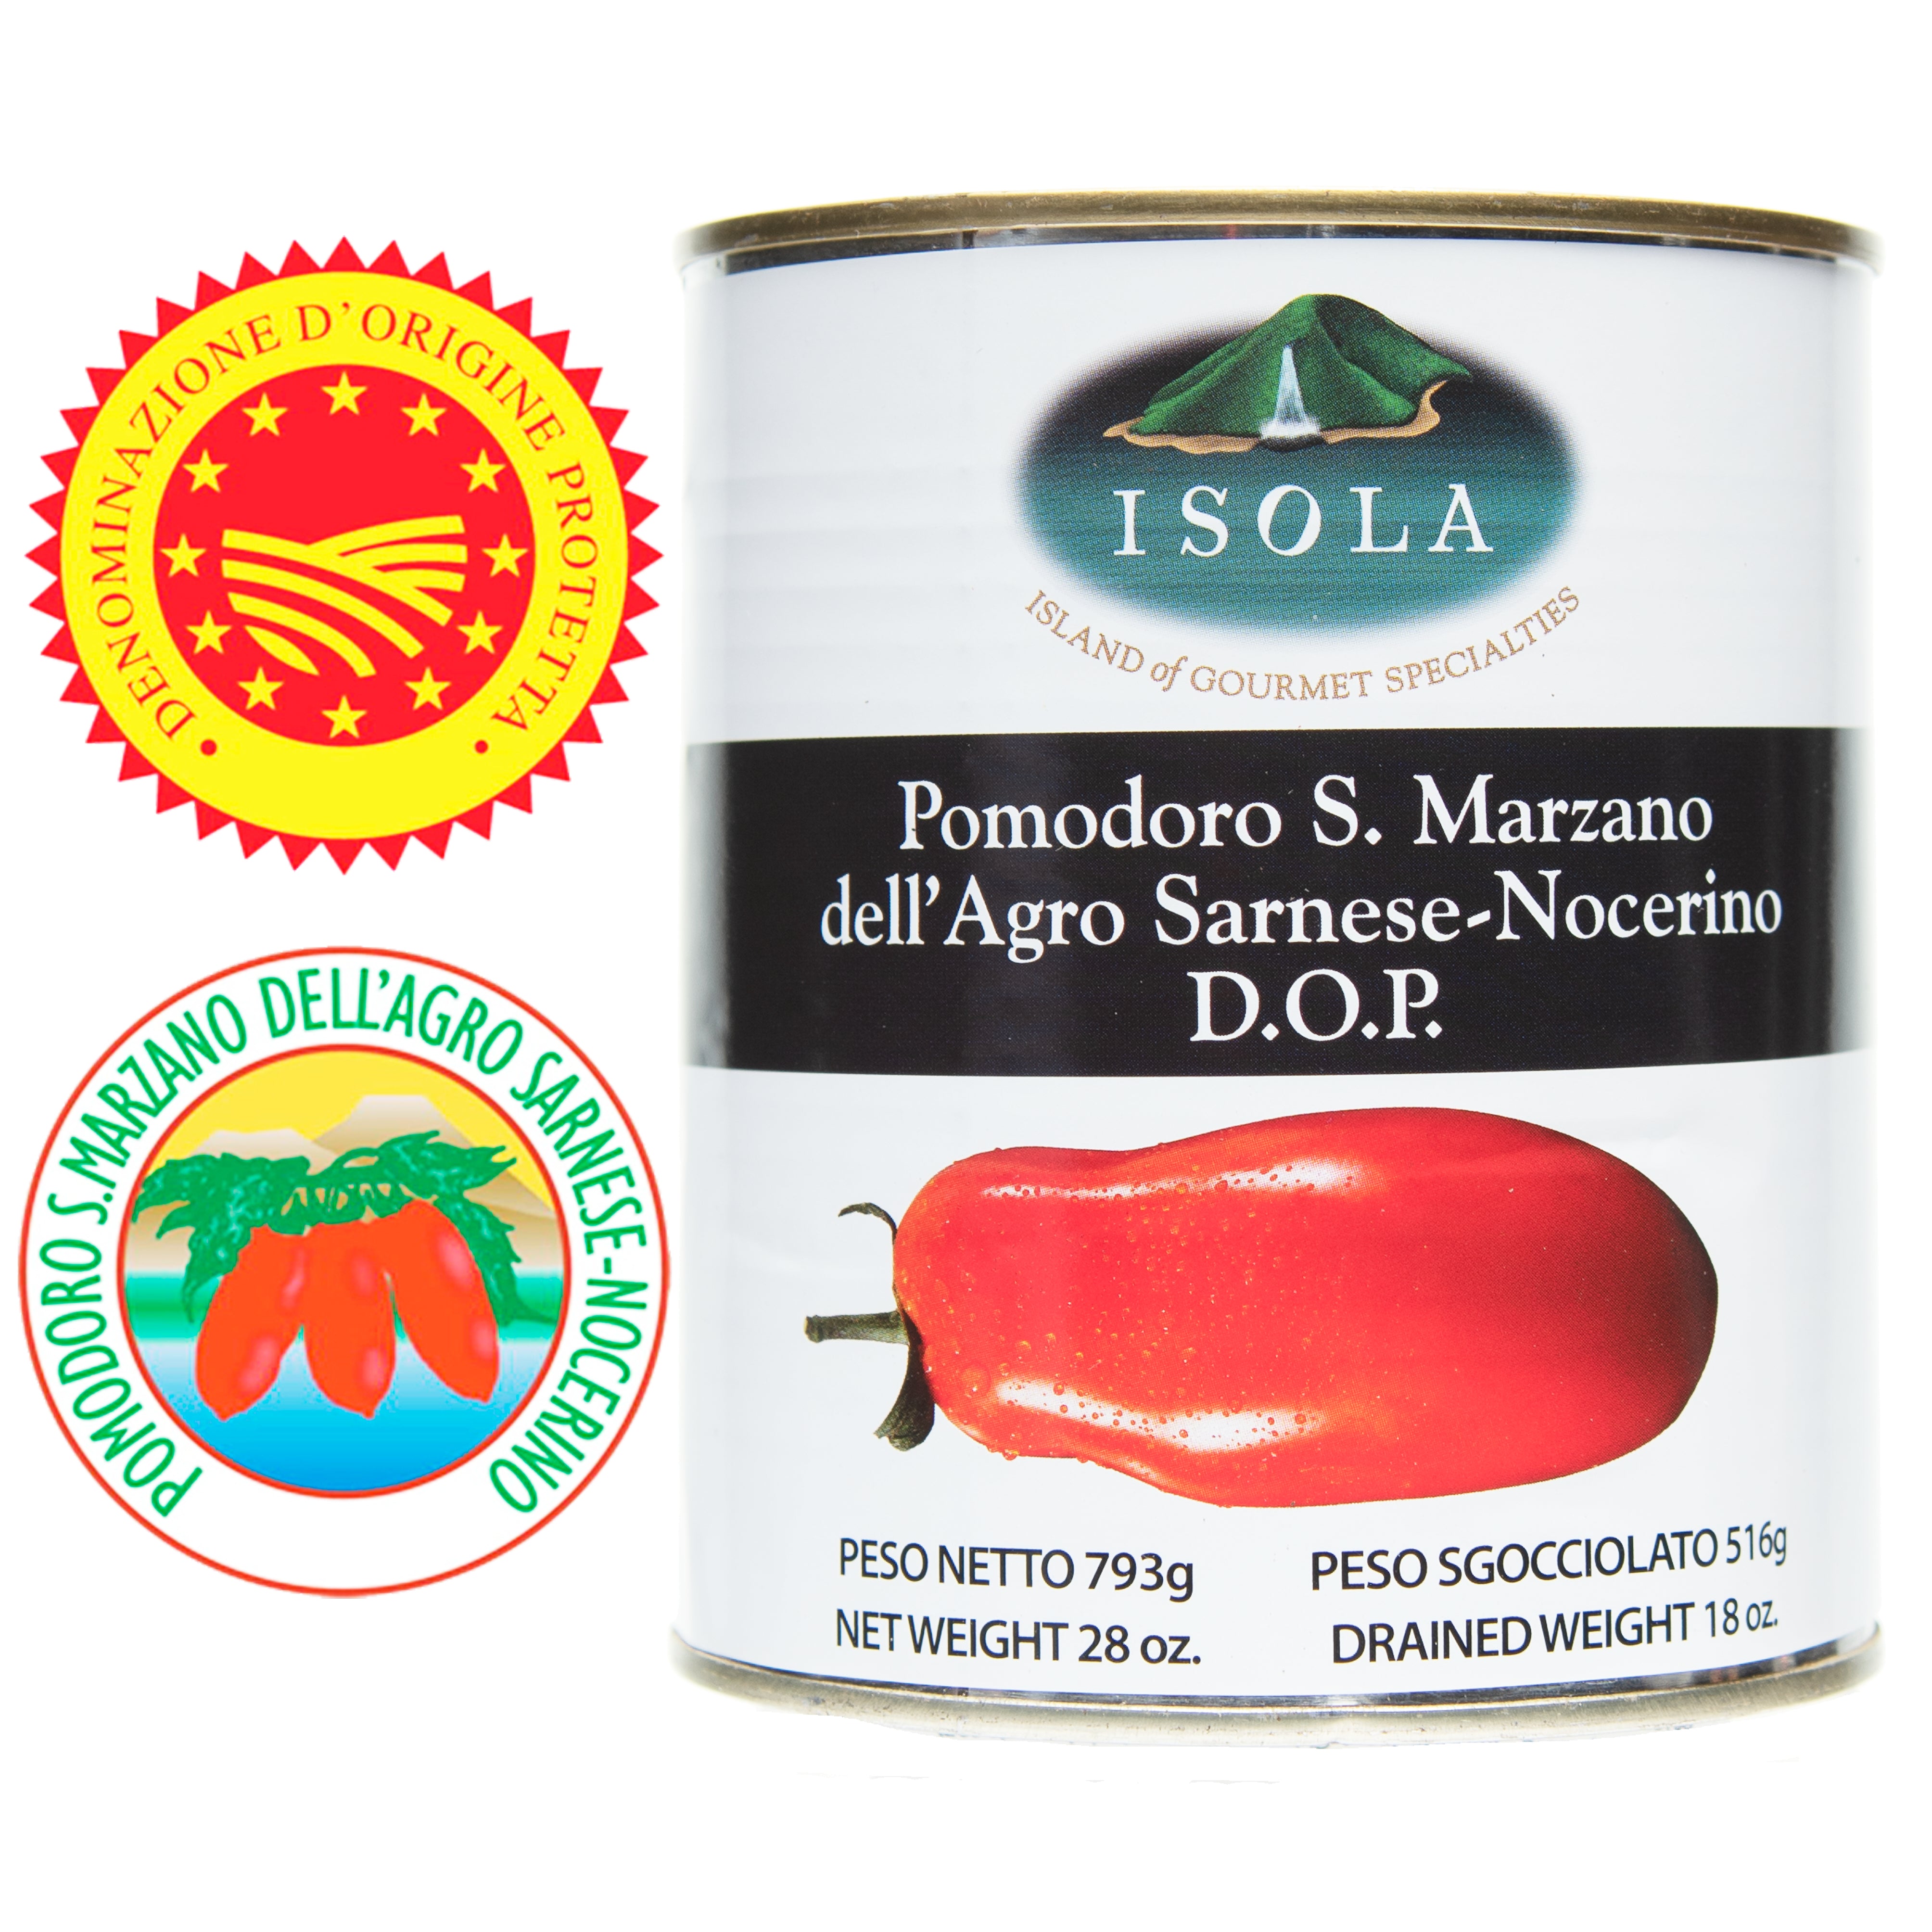 DOP San Marzano Tomatoes